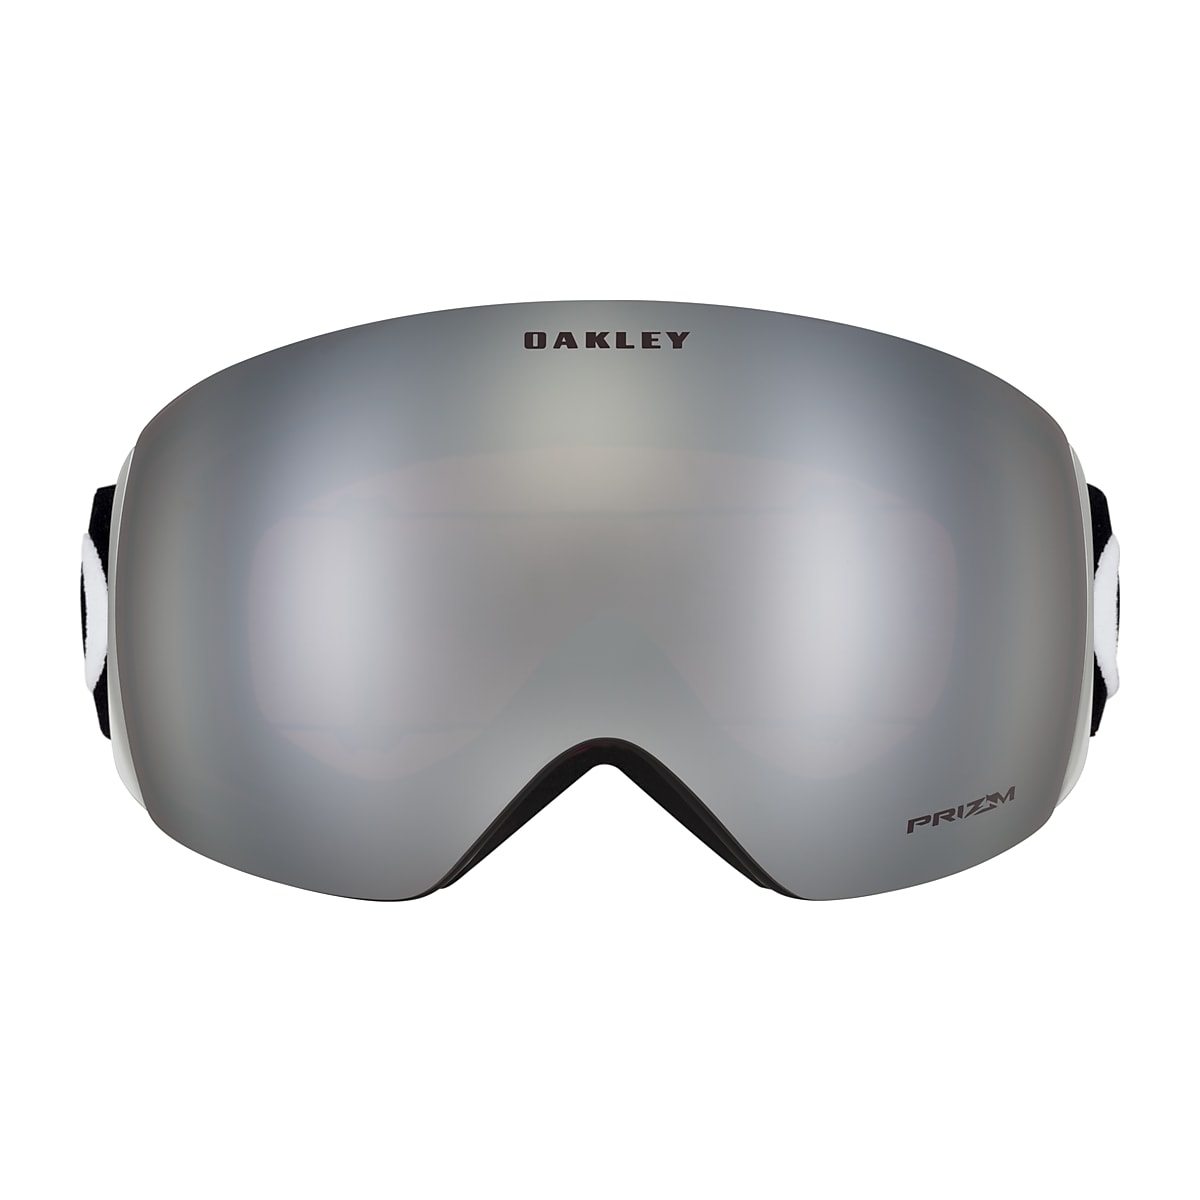 Oakley Flight Deck™ L Snow Goggles - Matte Black - Prizm Snow Sapphire  Iridium - OO7050-20 | Oakley JP Store